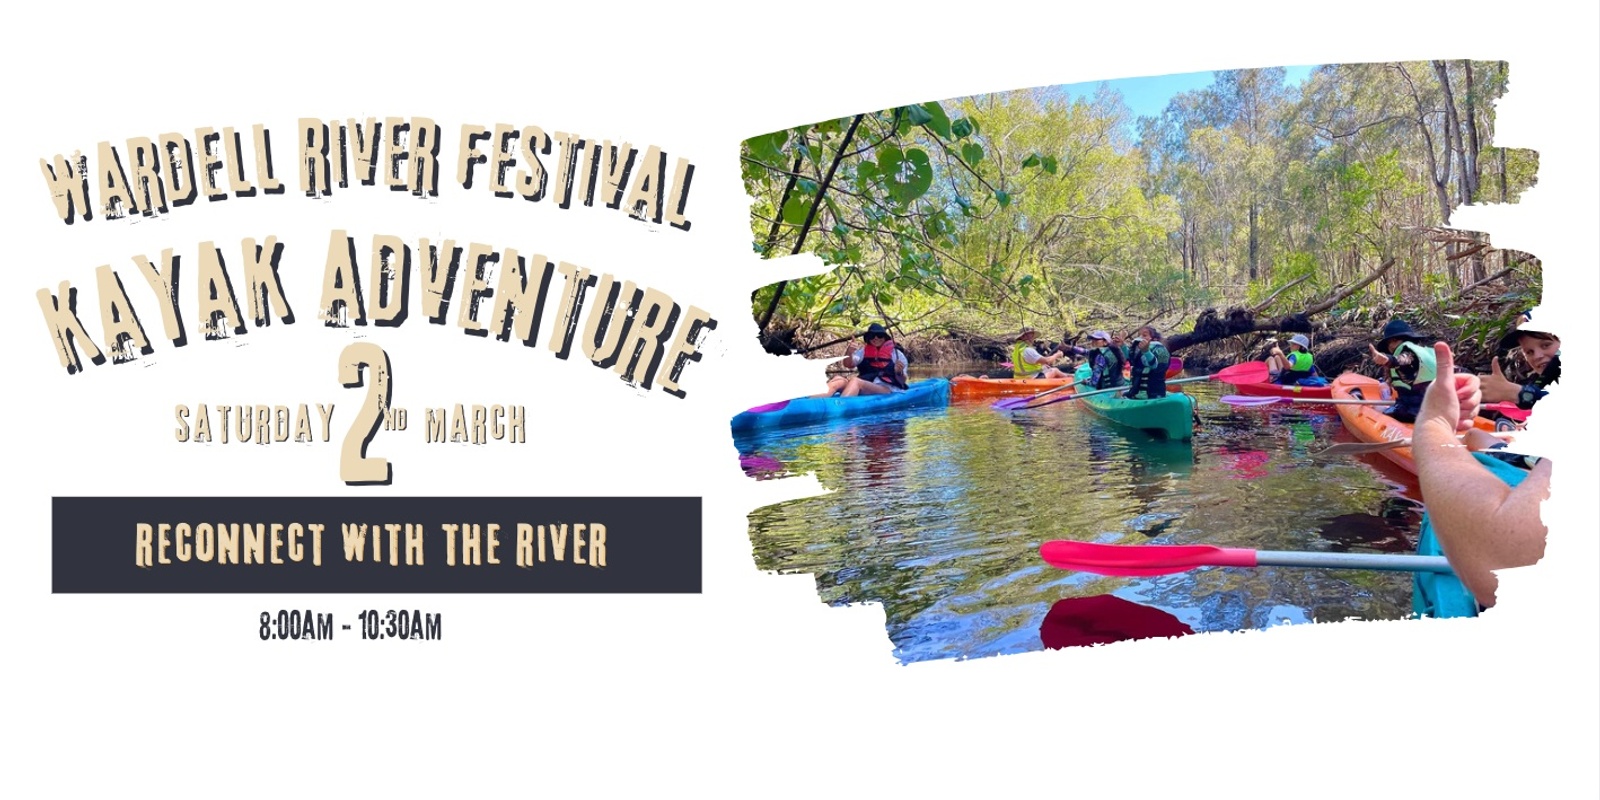 Banner image for Kayak Adventure : Wardell River Festival